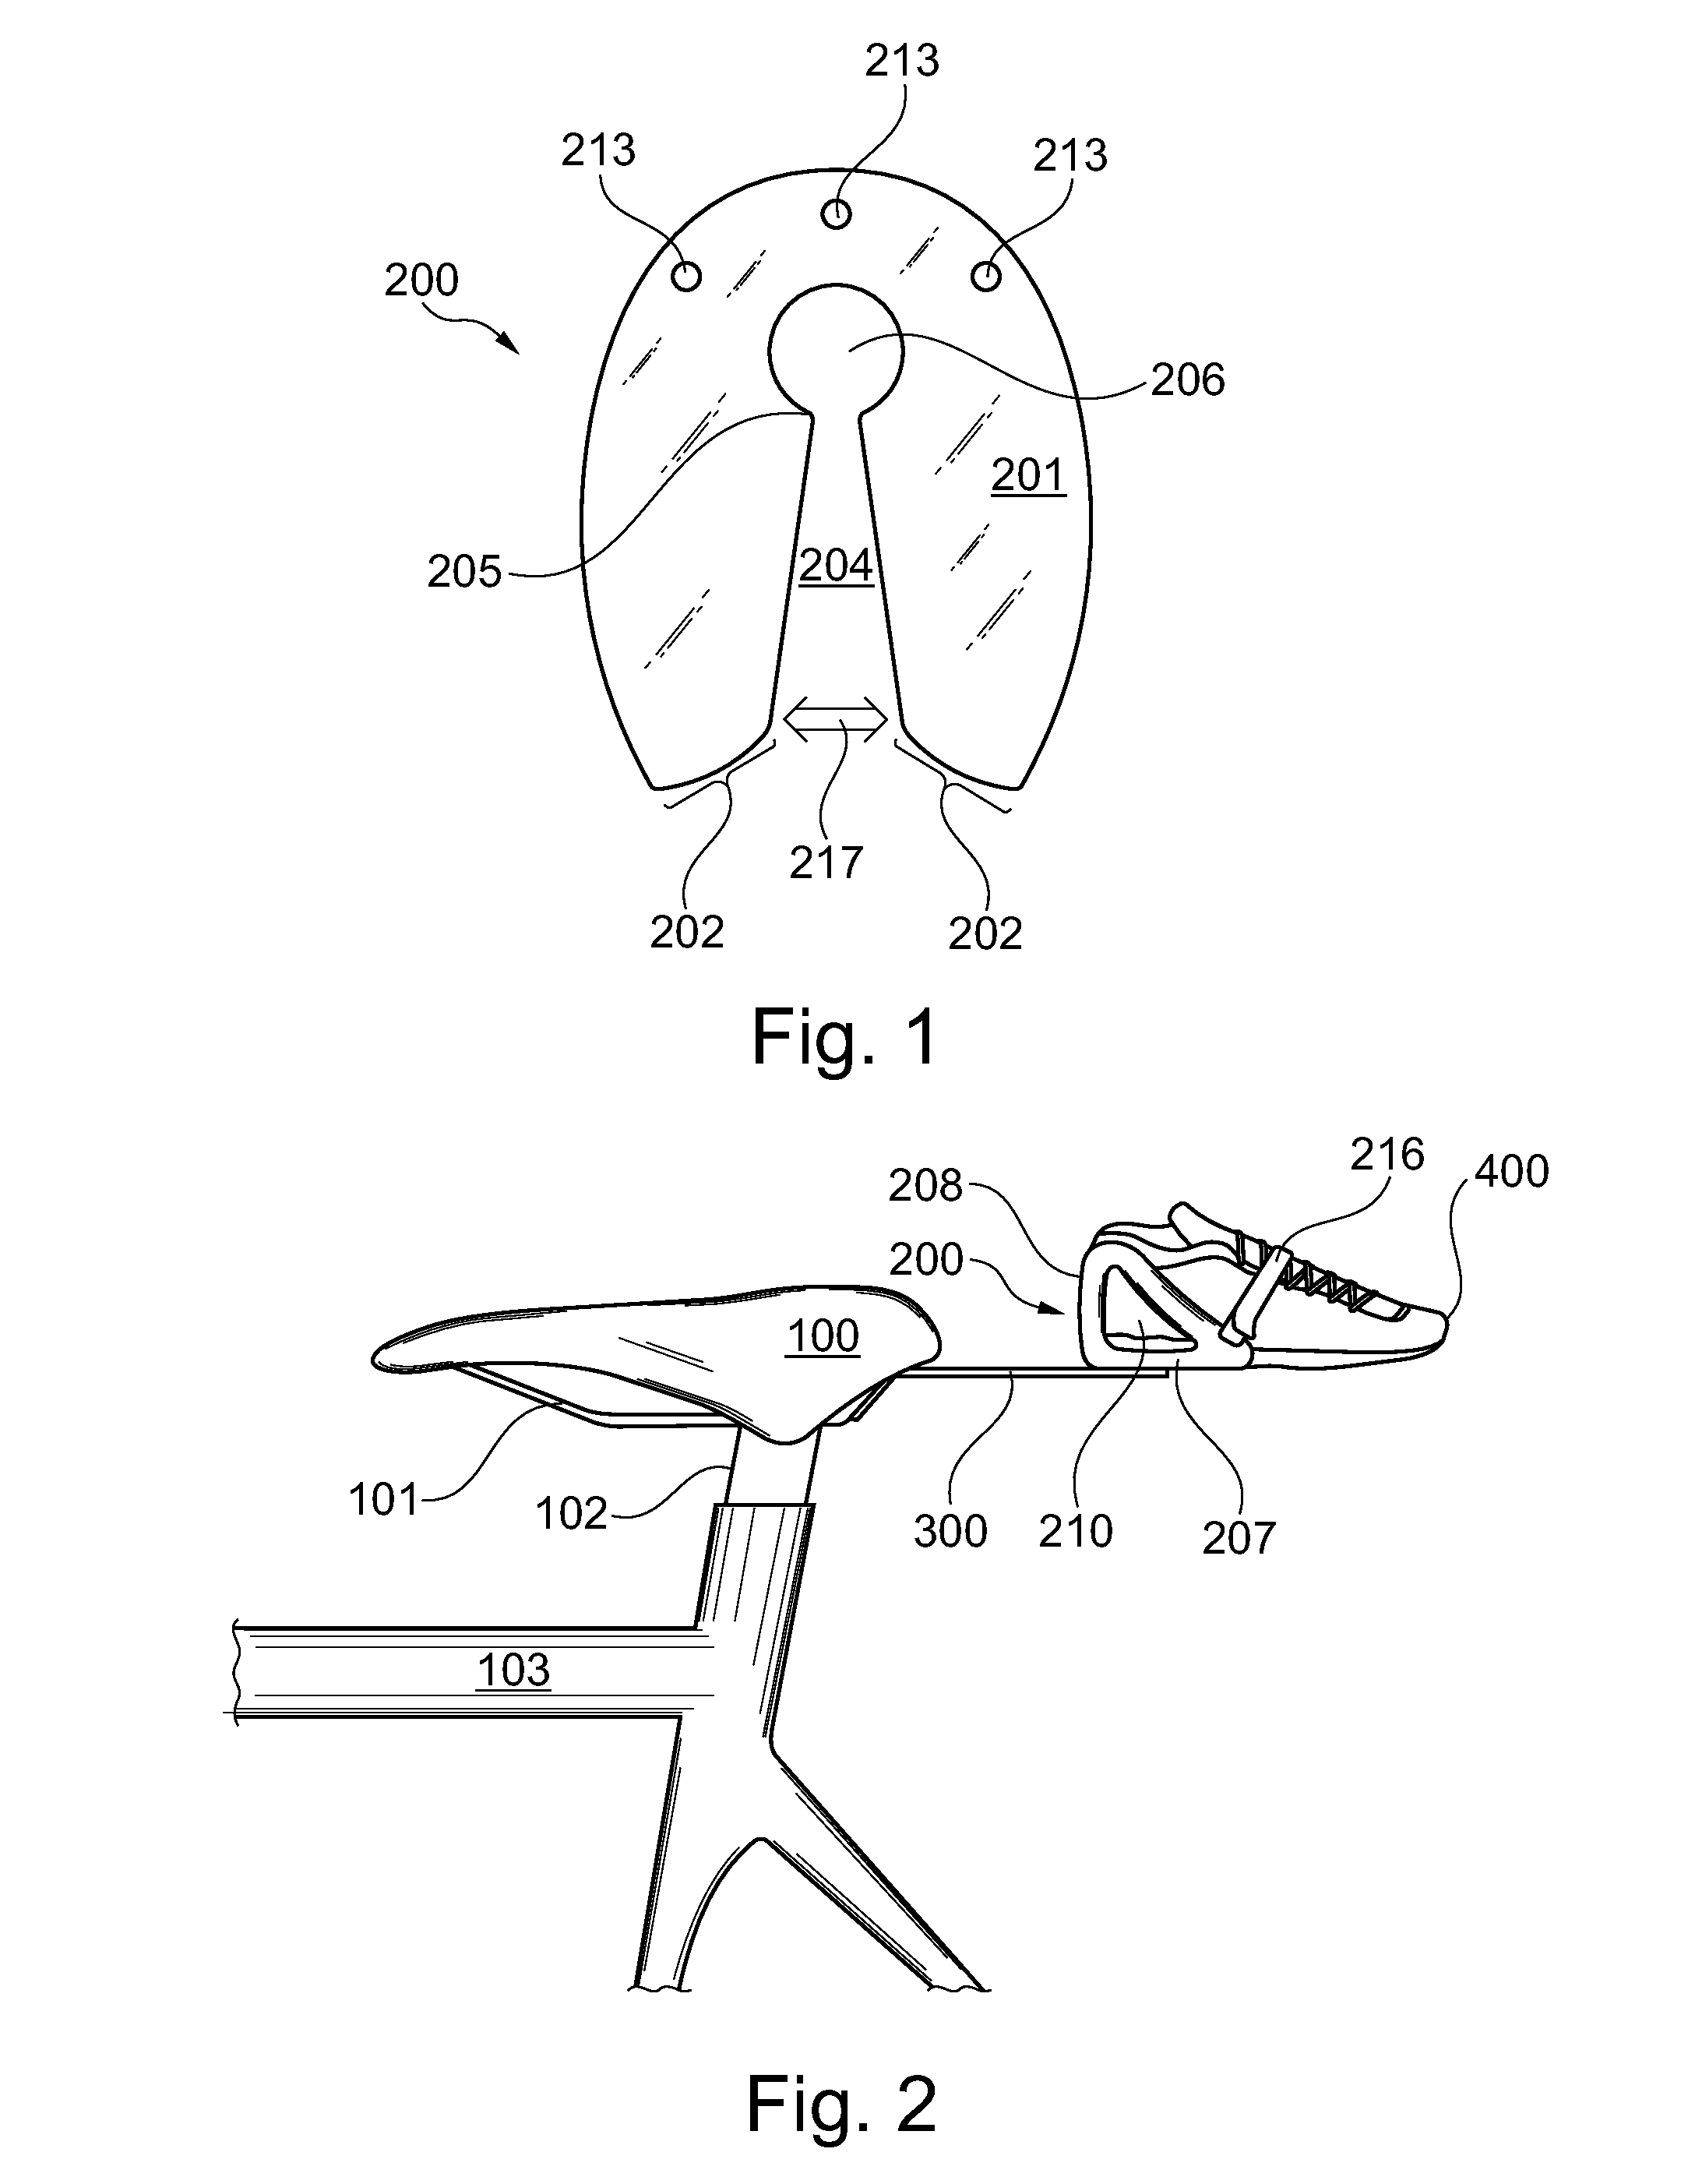 Shoe holder system for bicycle saddle